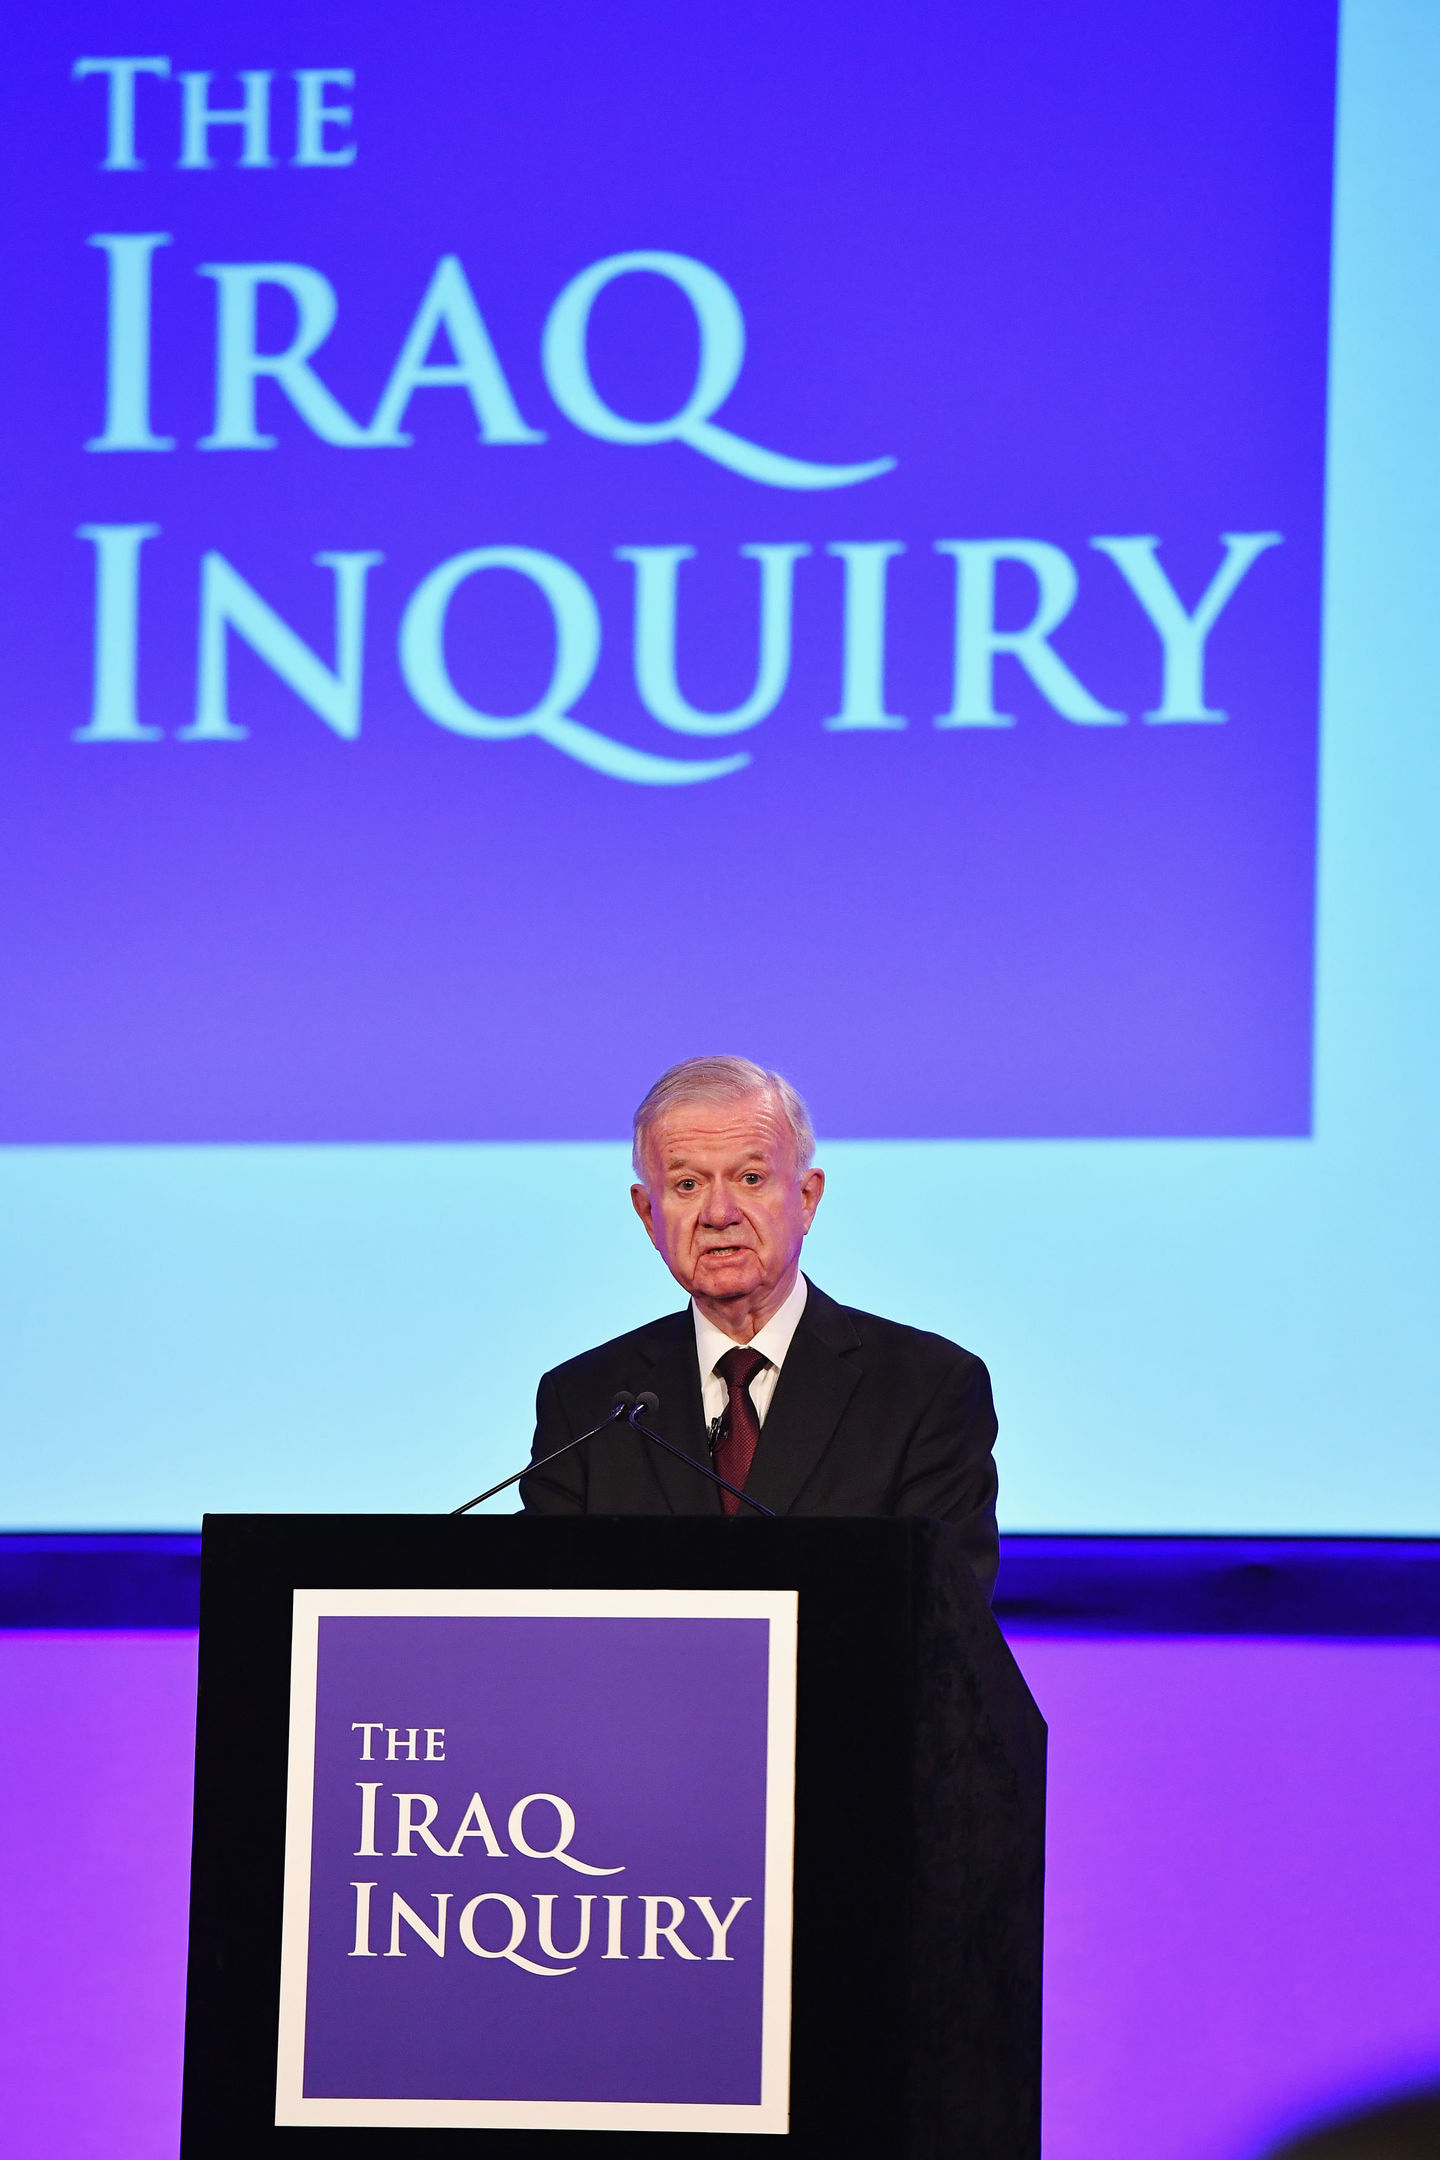 Sir John Chilcot presents The Iraq Inquiry Report.